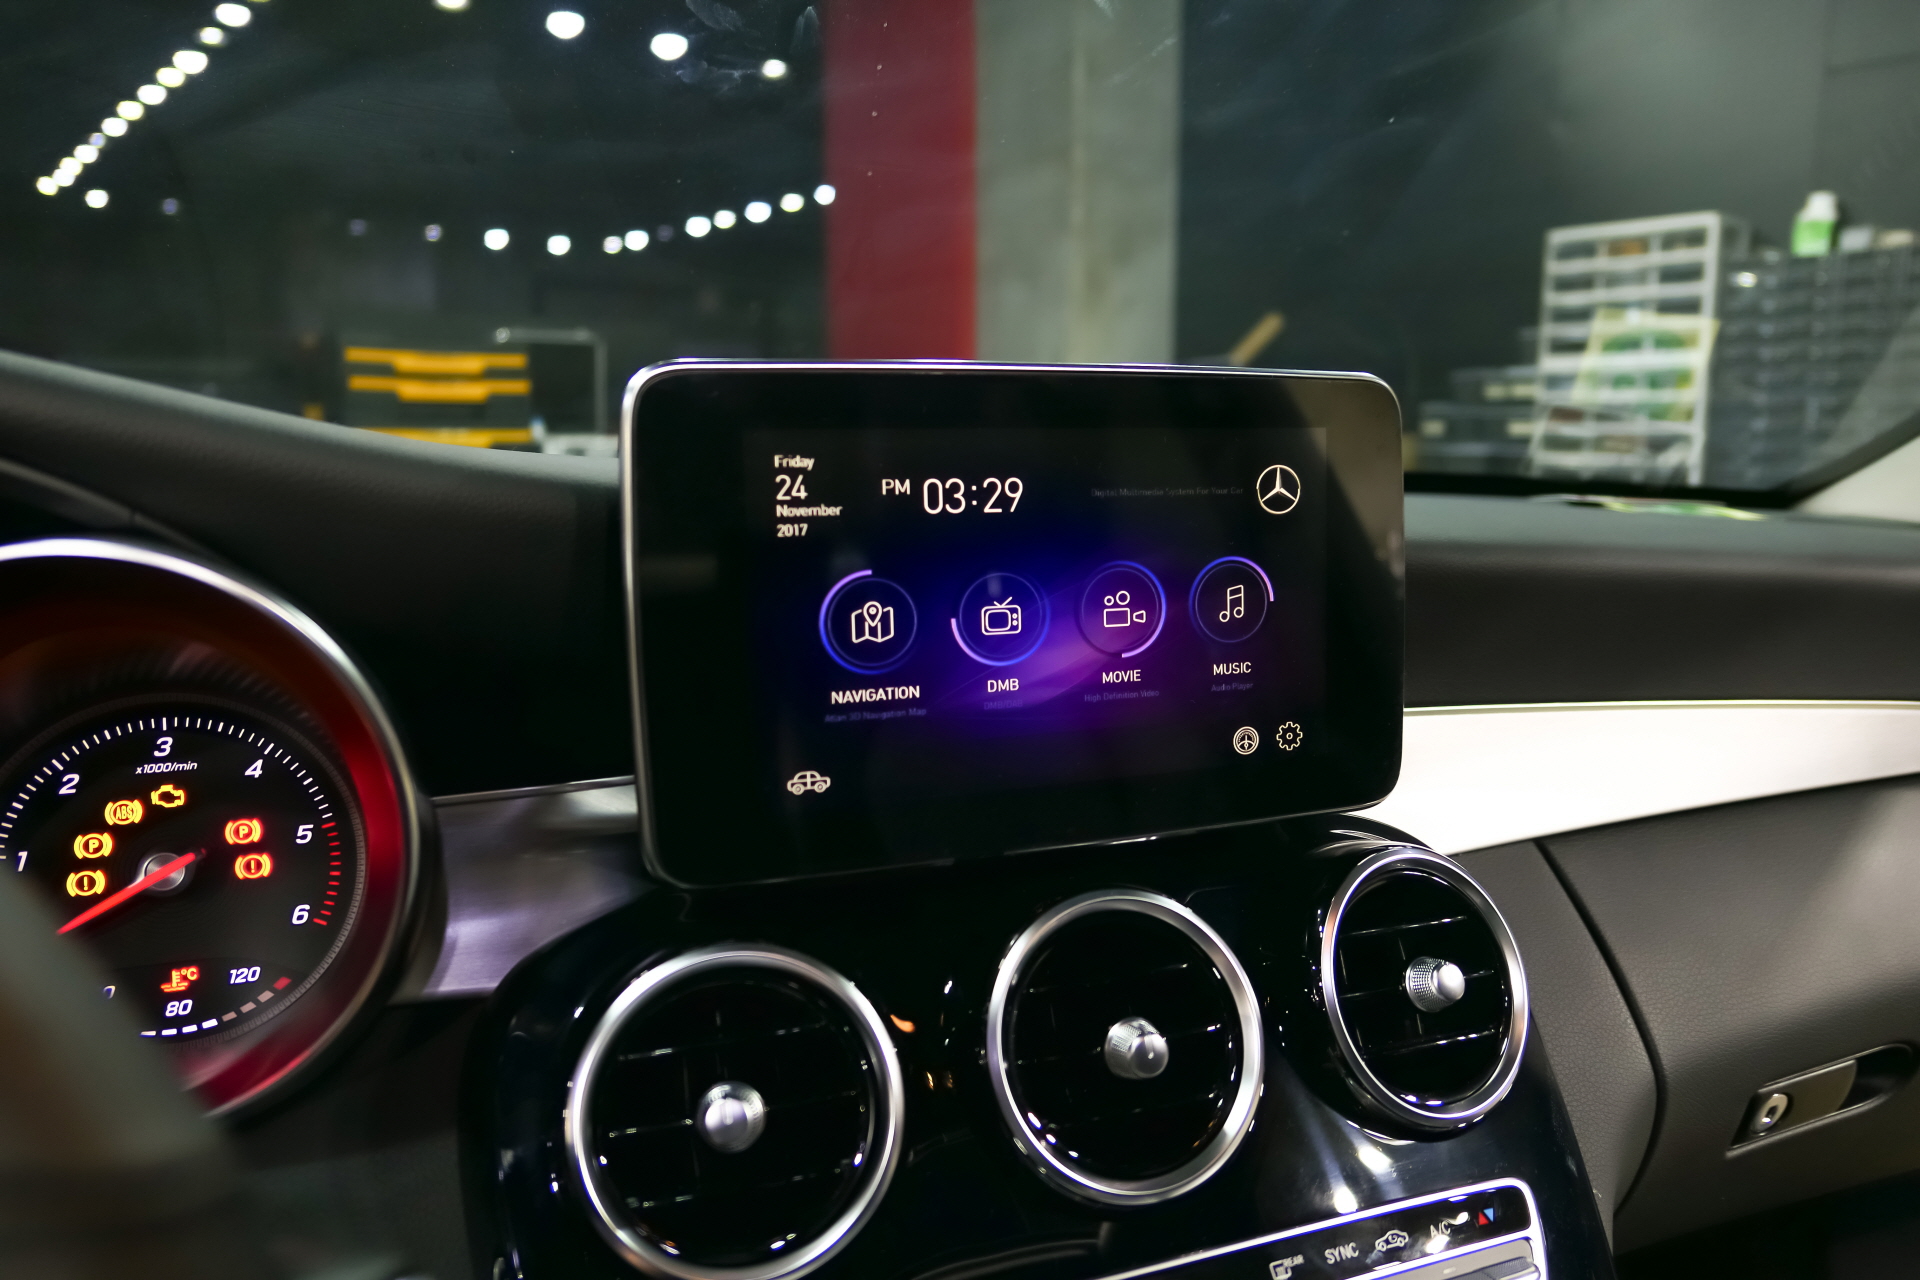 Android System for 2017 Mercedes-Benz W205 "N-LINK2 V4"